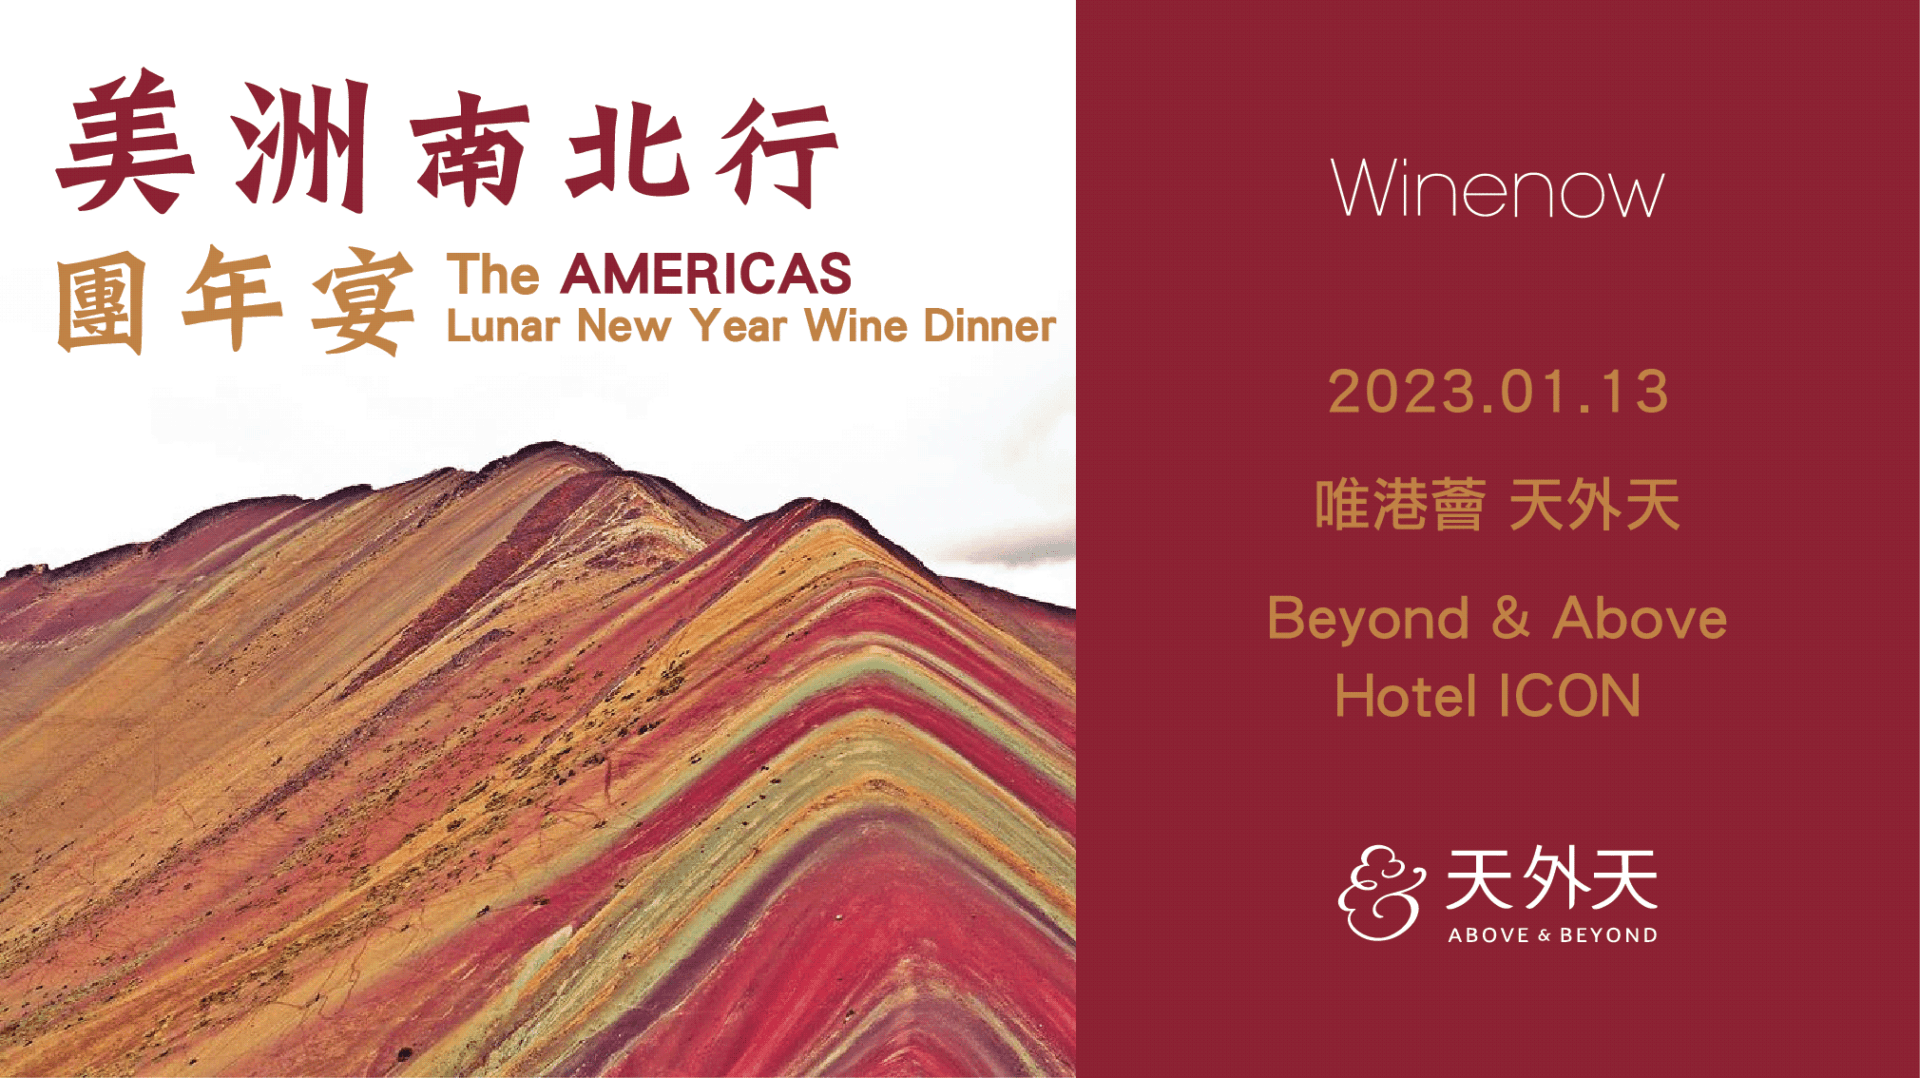 美洲南北行: 酒經團年宴 The Americas Lunar New Year Wine Dinner - WineNow